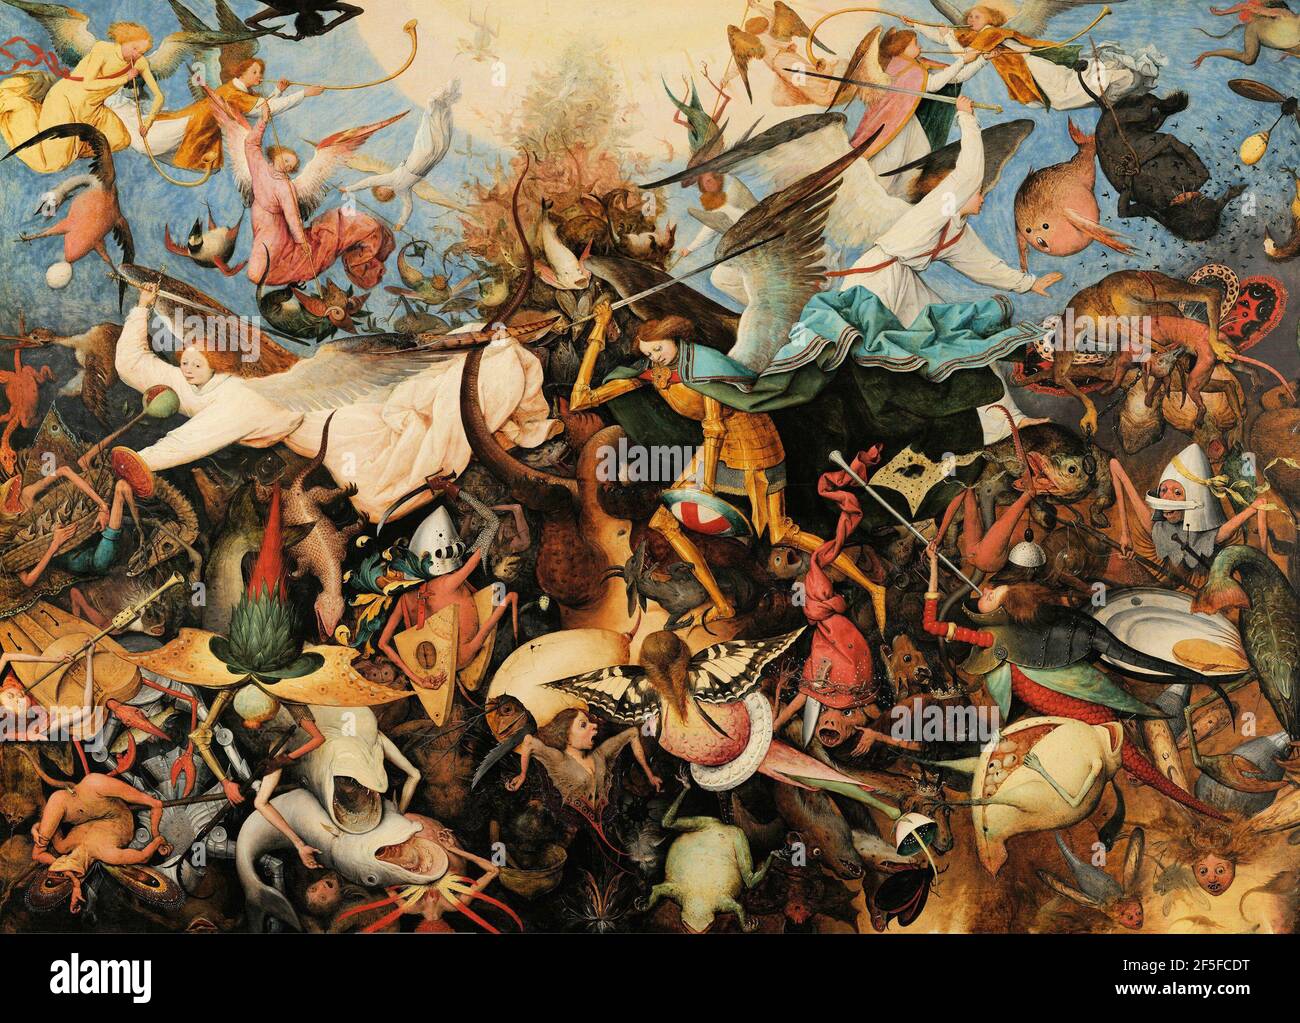 Title: The Fall of the Rebel Angels Creator:  Pieter Bruegel the Elder Date: 1562  Medium: Oil on panel Dimensions: 117x162 cms Location: Musees Royaux des Beaux-Arts de Belgique, Brussels, Belgium Stock Photo